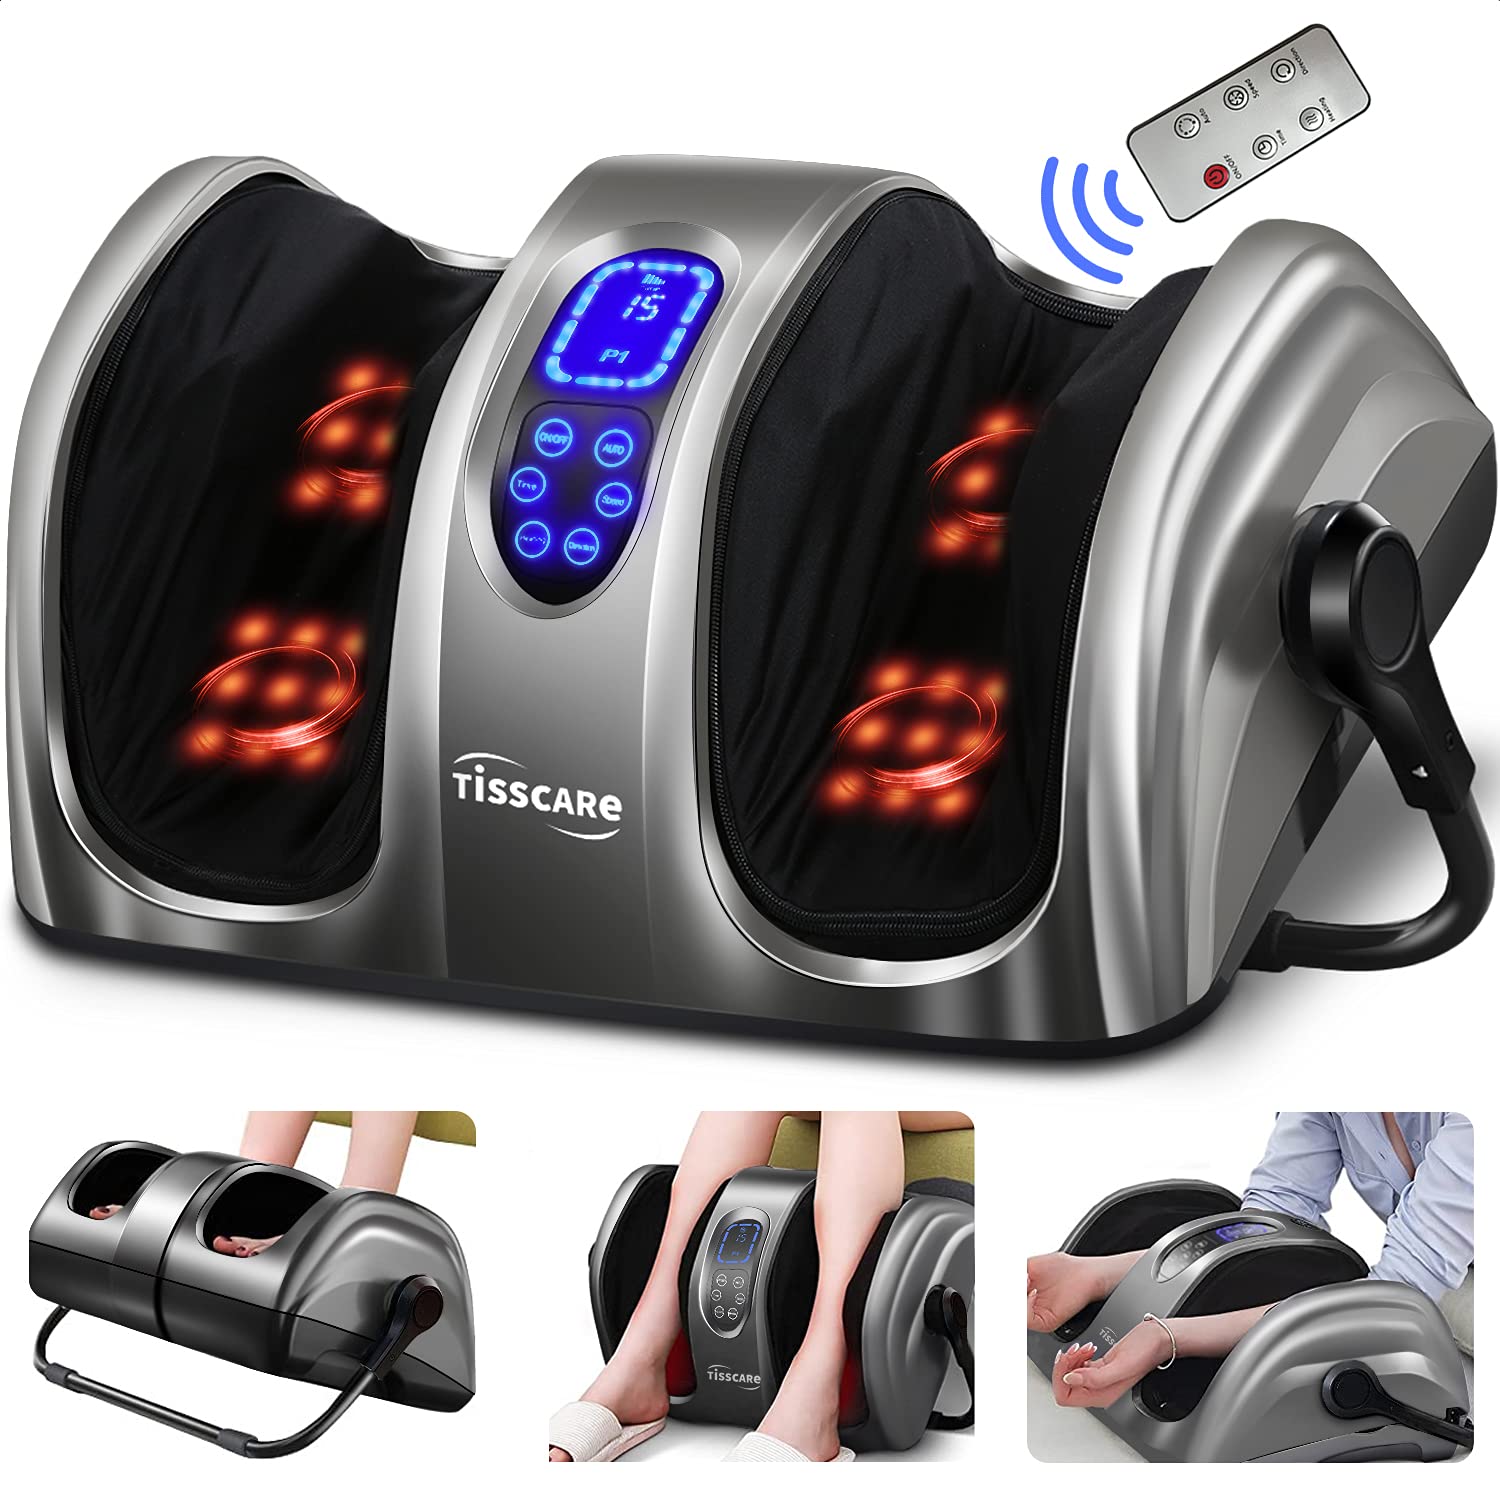 Tisscare Foot Massager-Shiatsu Foot Massage Machine W Heat & Remote 5-In-1 Reflexology System-Kneading, Rolling, Scraping For Ca